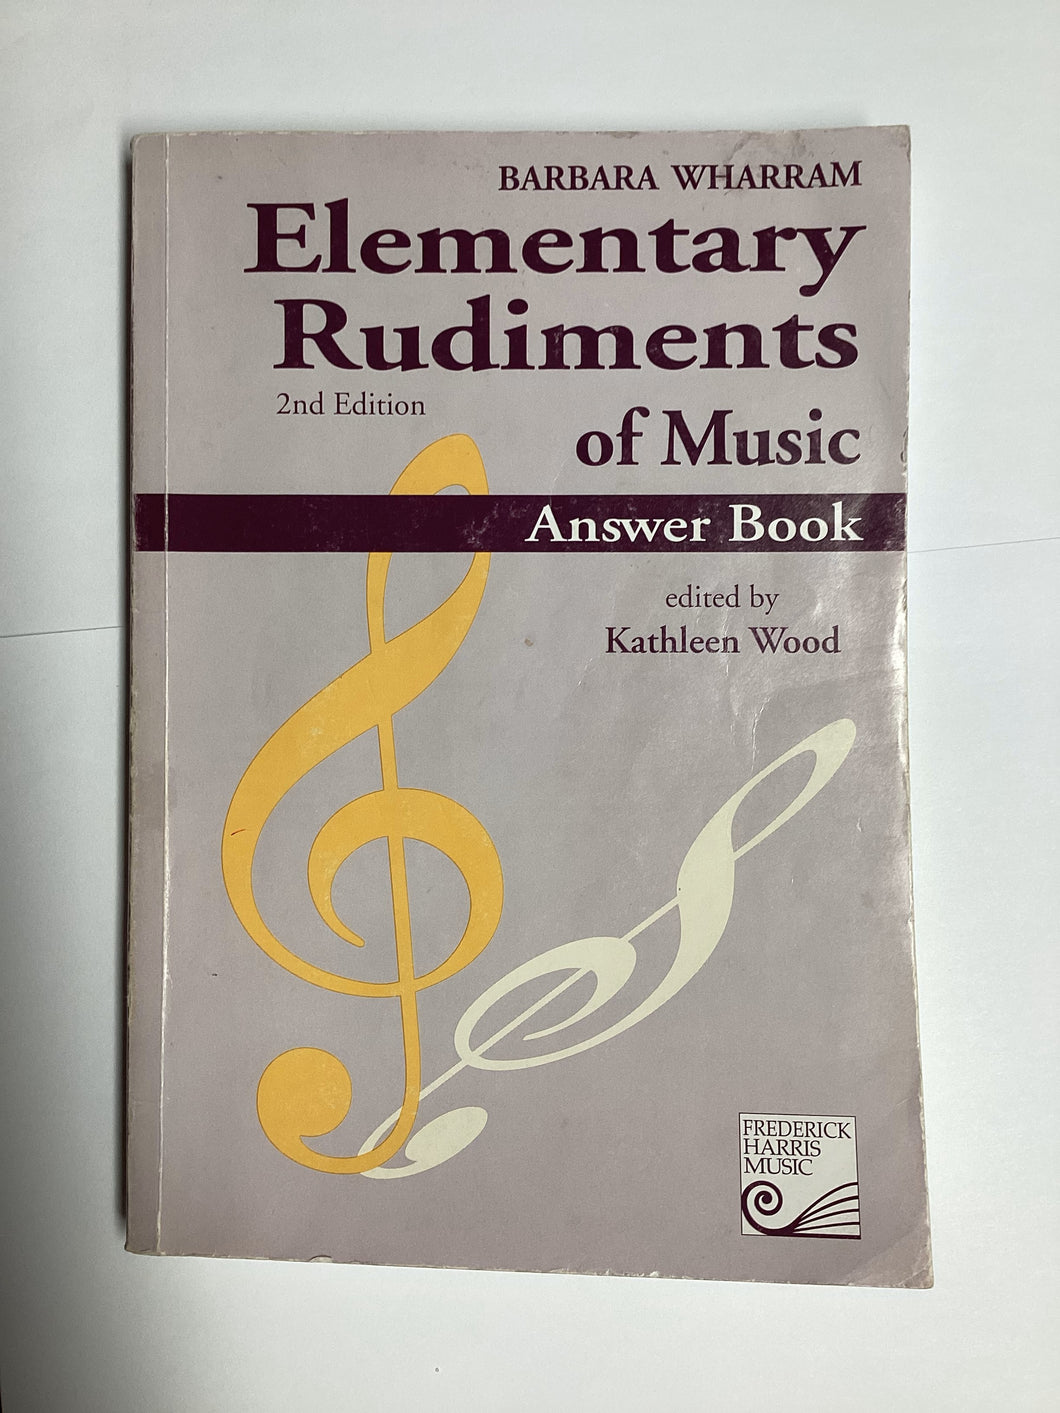 Elementary Rudiments of Music Answer Book 2nd Edition - Barbara Wharram